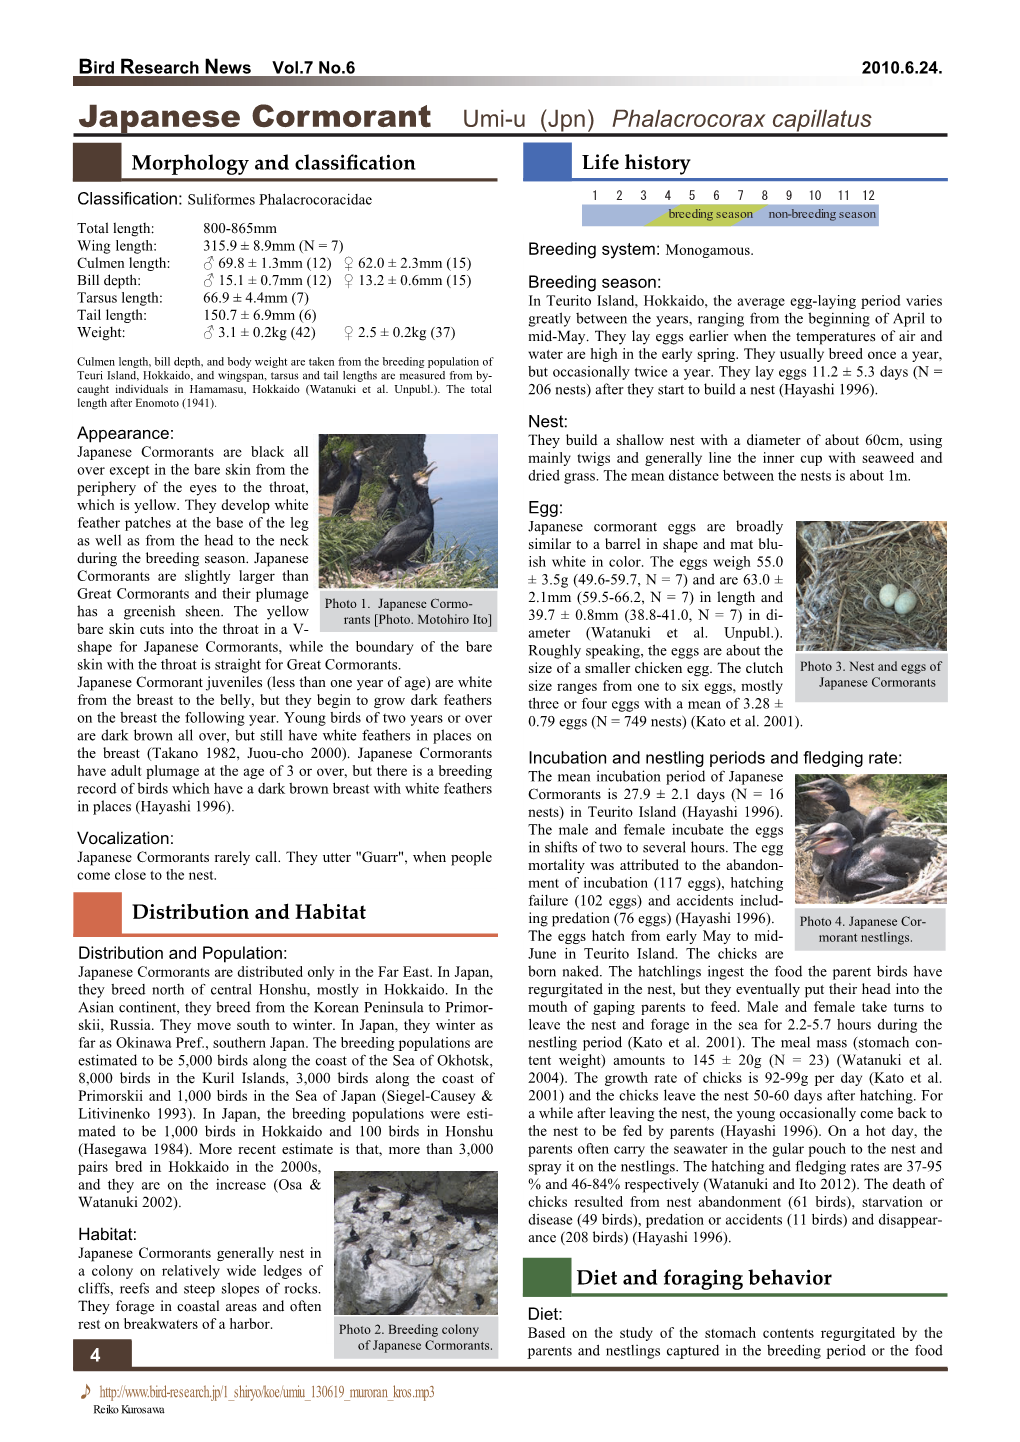 Japanese Cormorant Umi-U (Jpn) Phalacrocorax Capillatus Morphology and Classiﬁcation Life History